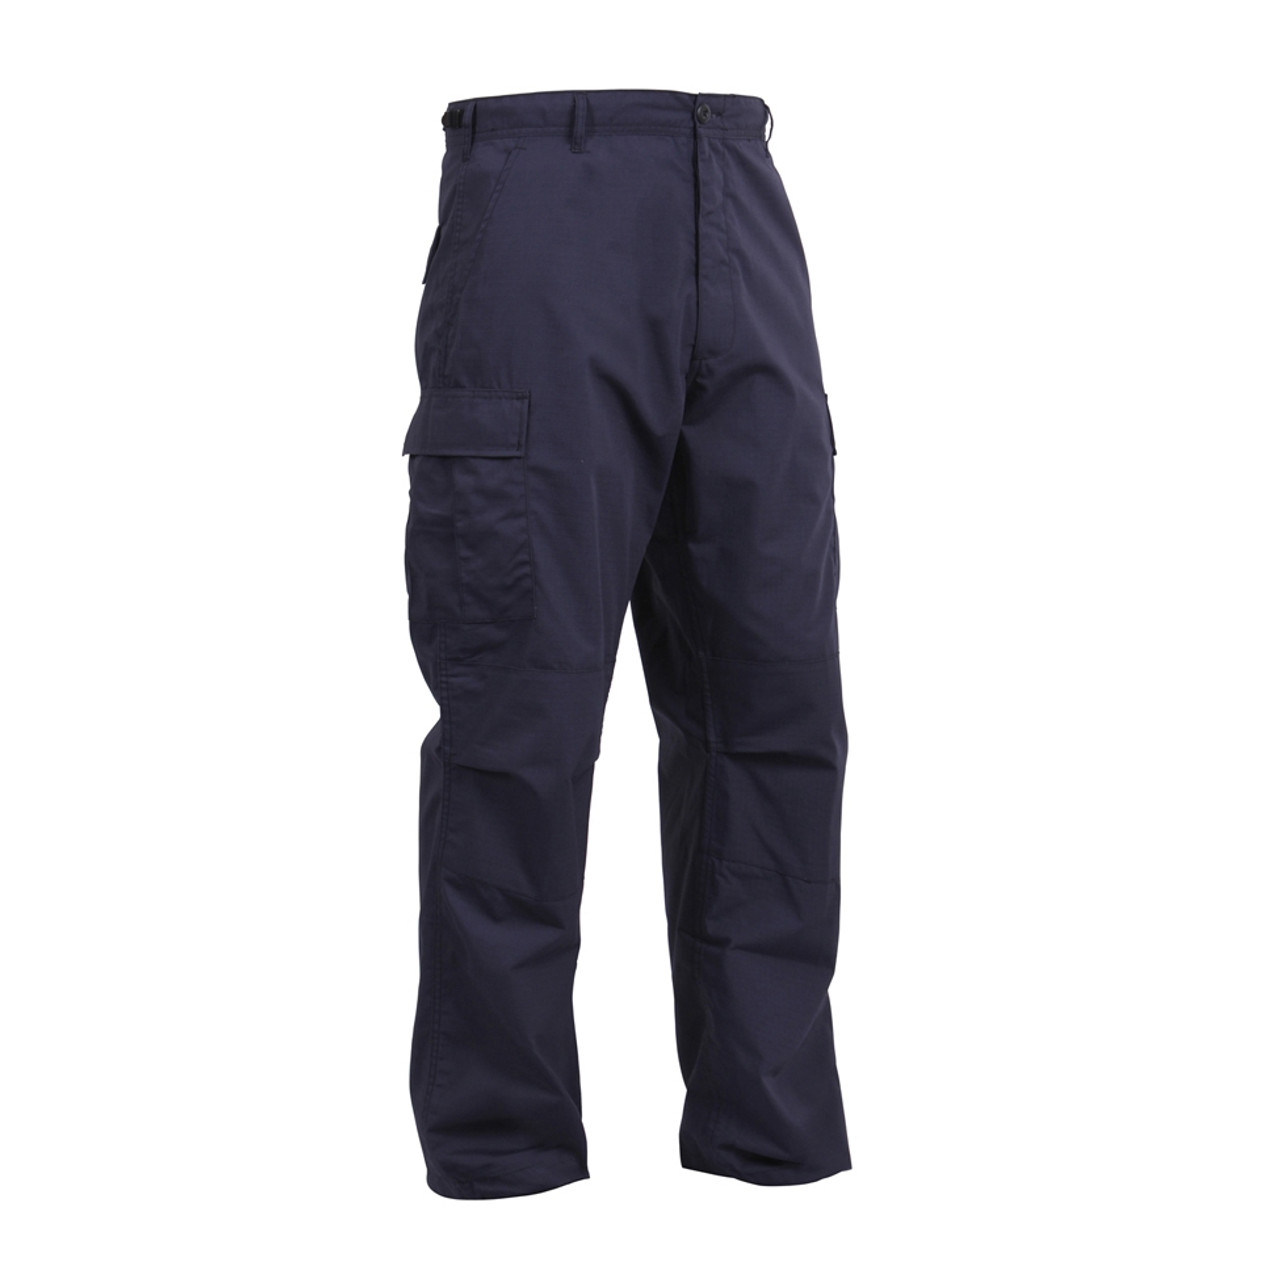 Shop Military Fatigue Pants, Tactical BDU’S - Fatigues Army Navy Gear